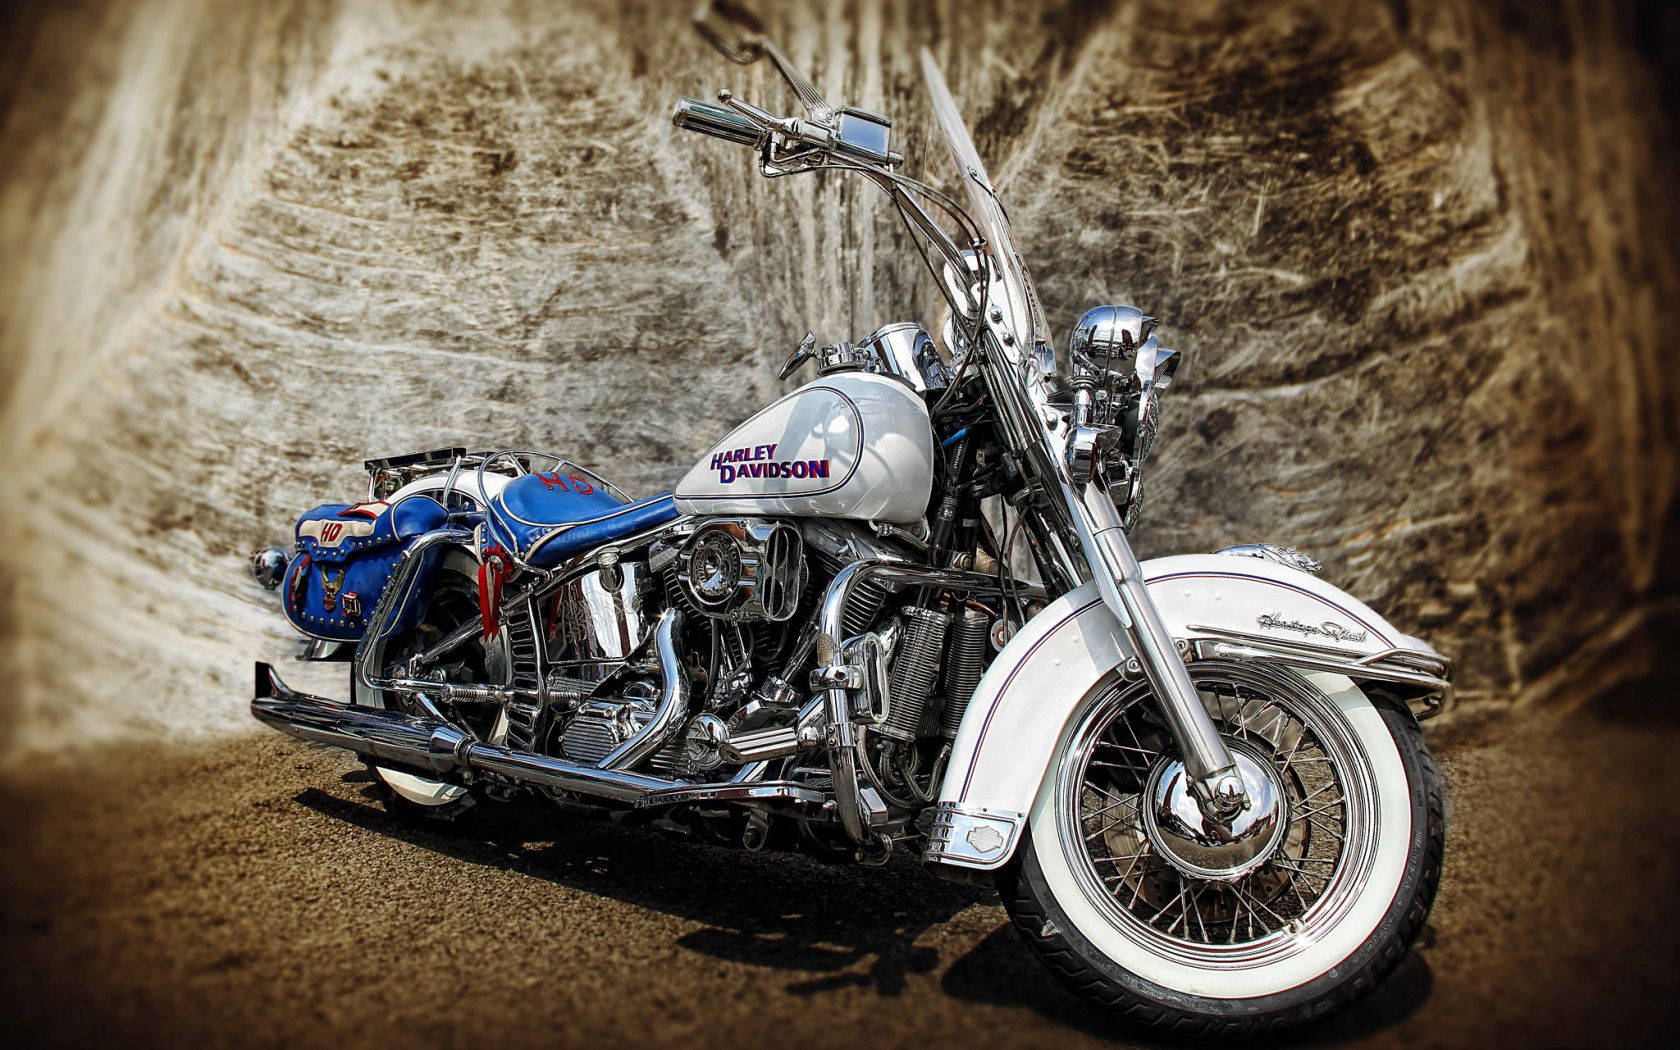 Free Harley Davidson Wallpaper Downloads, [200+] Harley Davidson Wallpapers  for FREE 